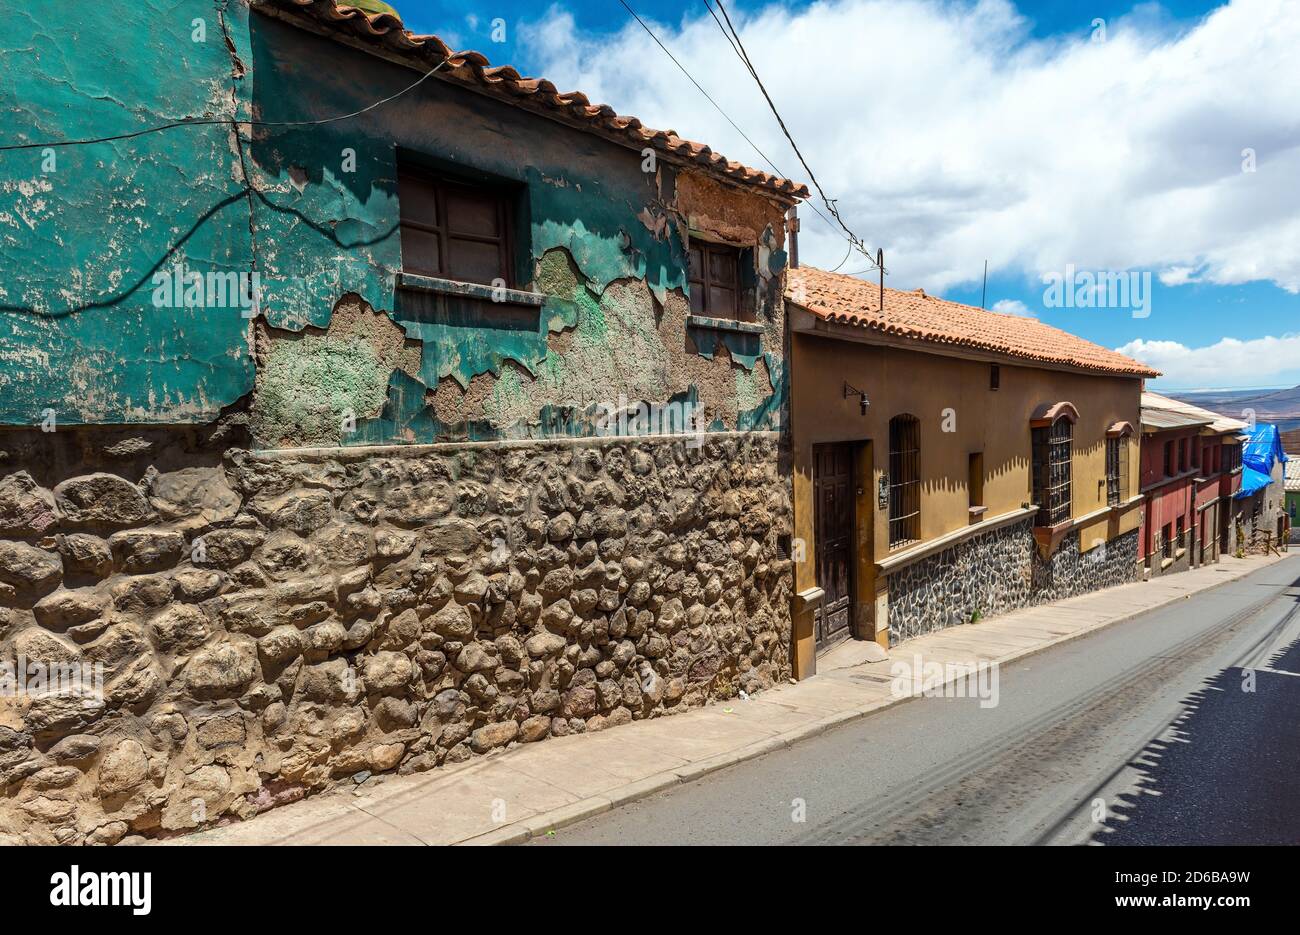 Calle con fachada de estilo colonial, Potosí, Bolivia. Foto de stock